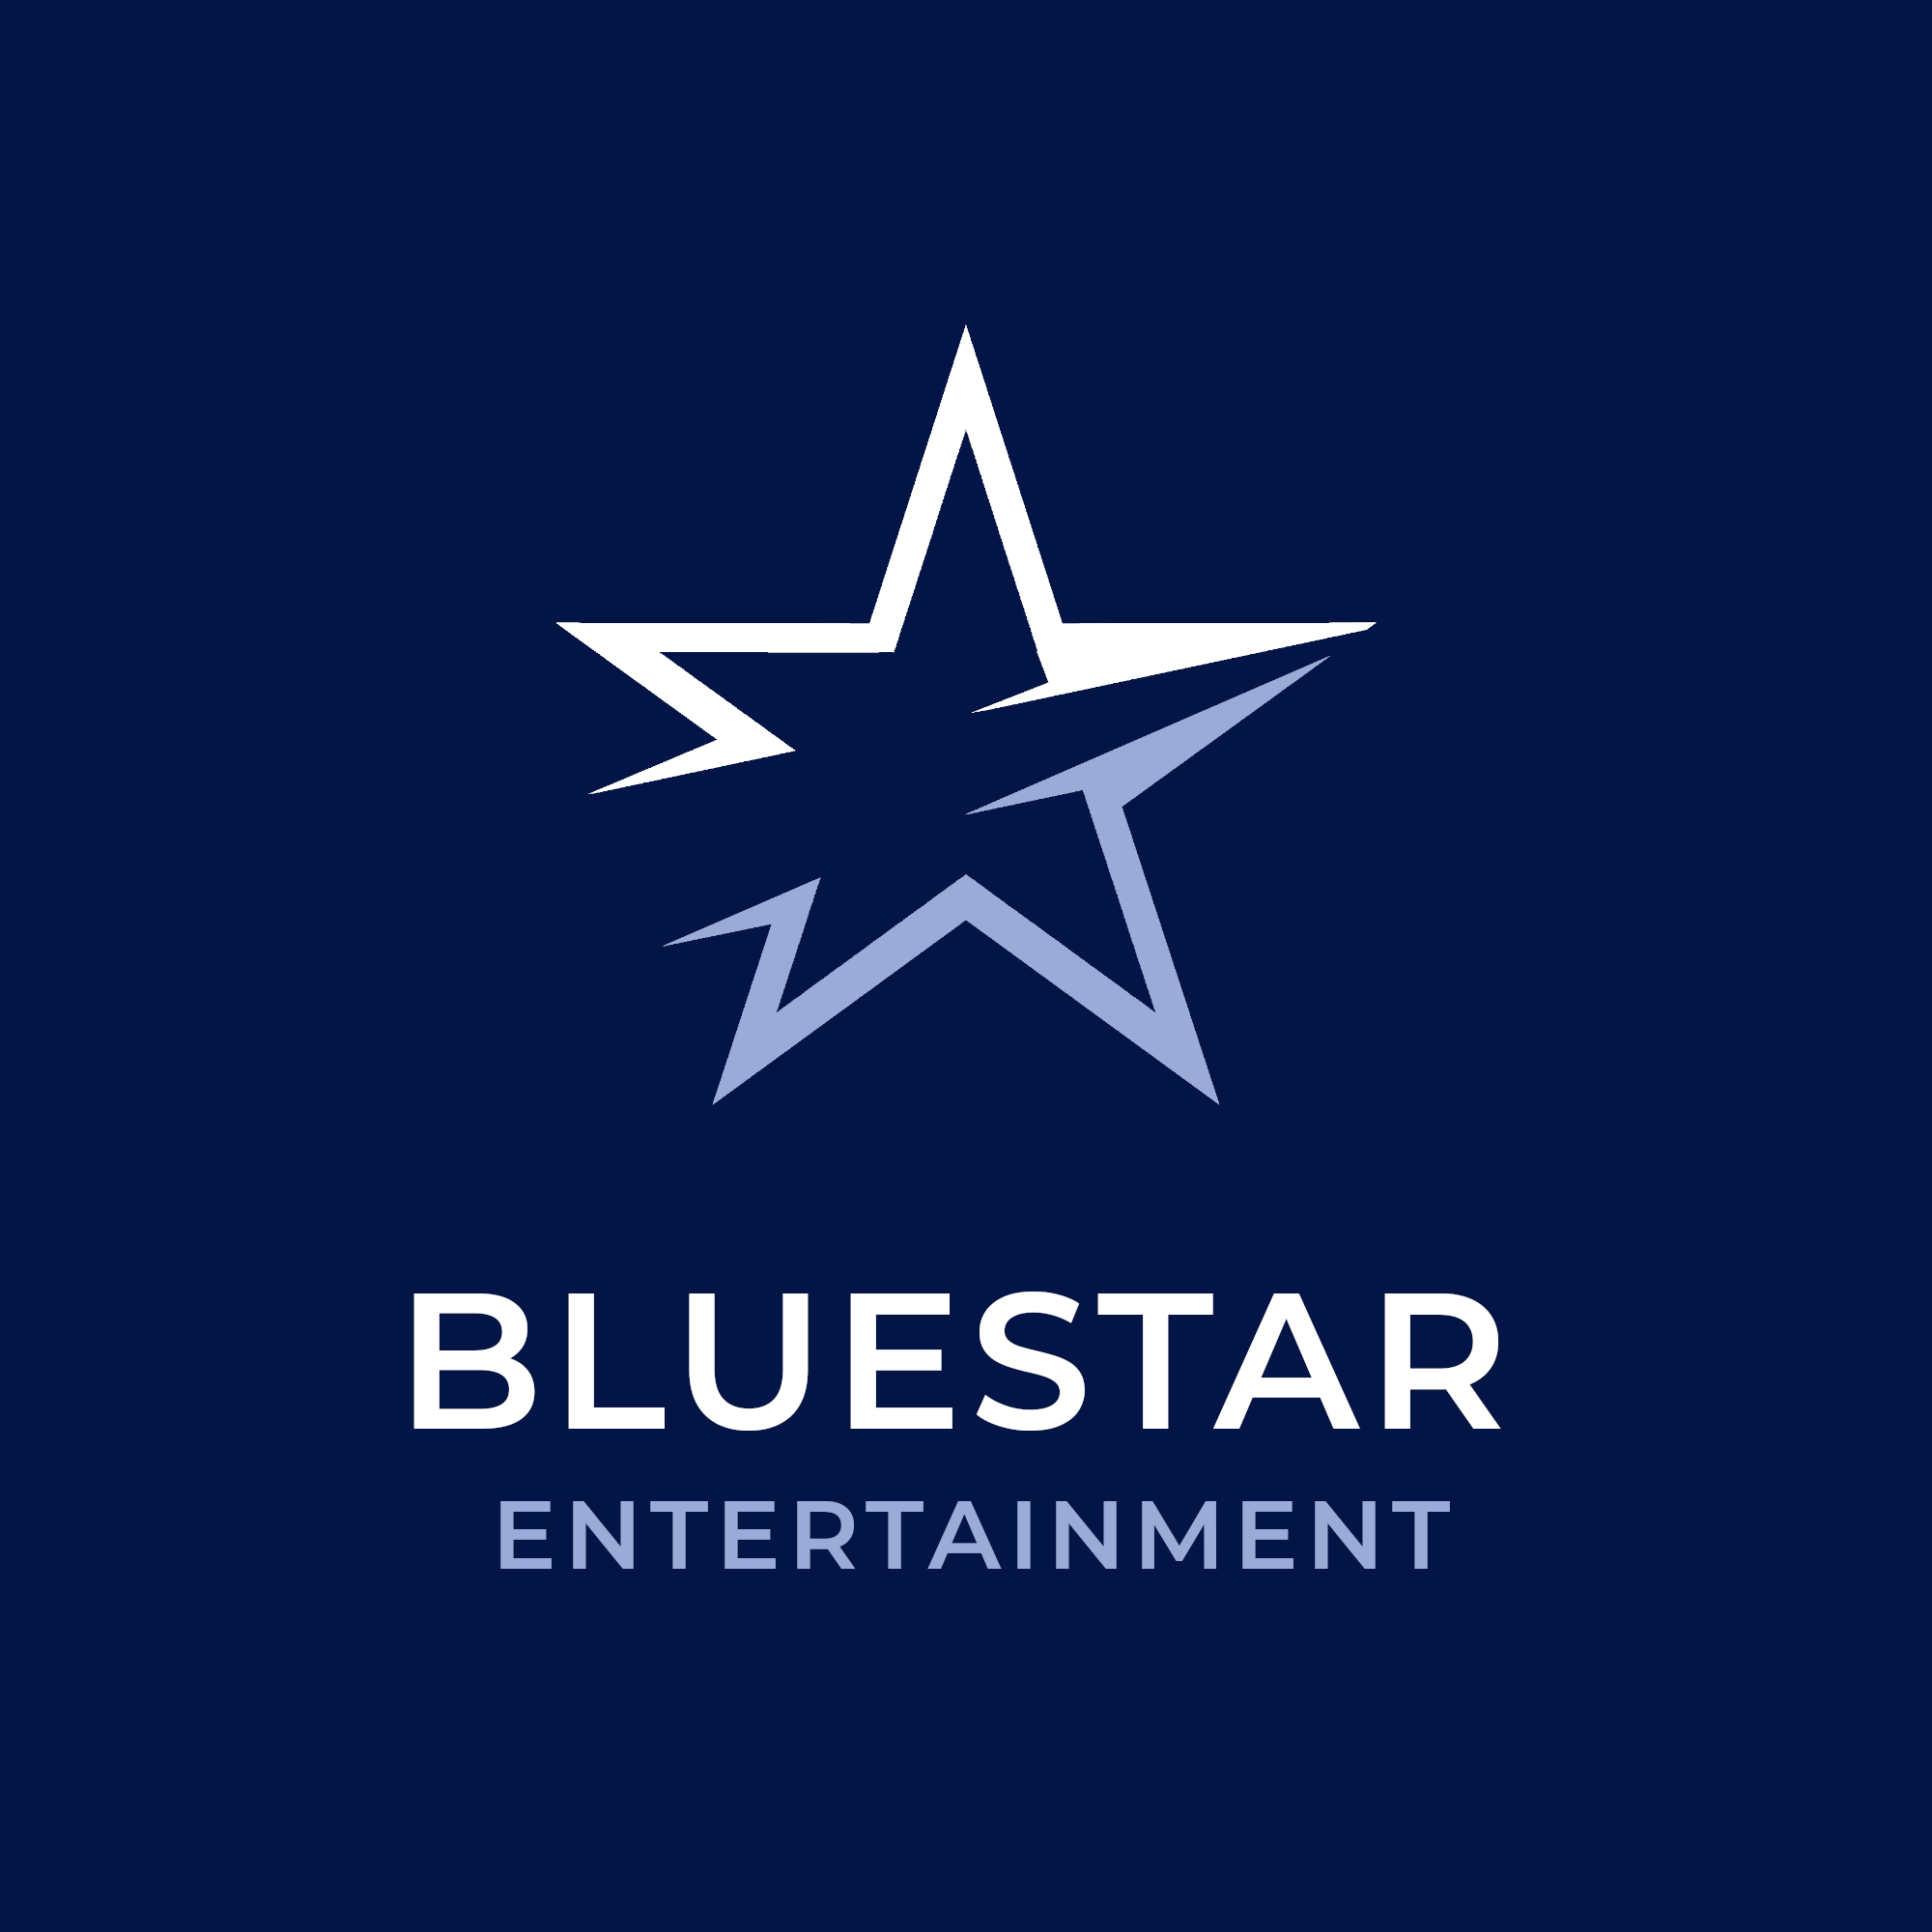 Bluestar Entertainment